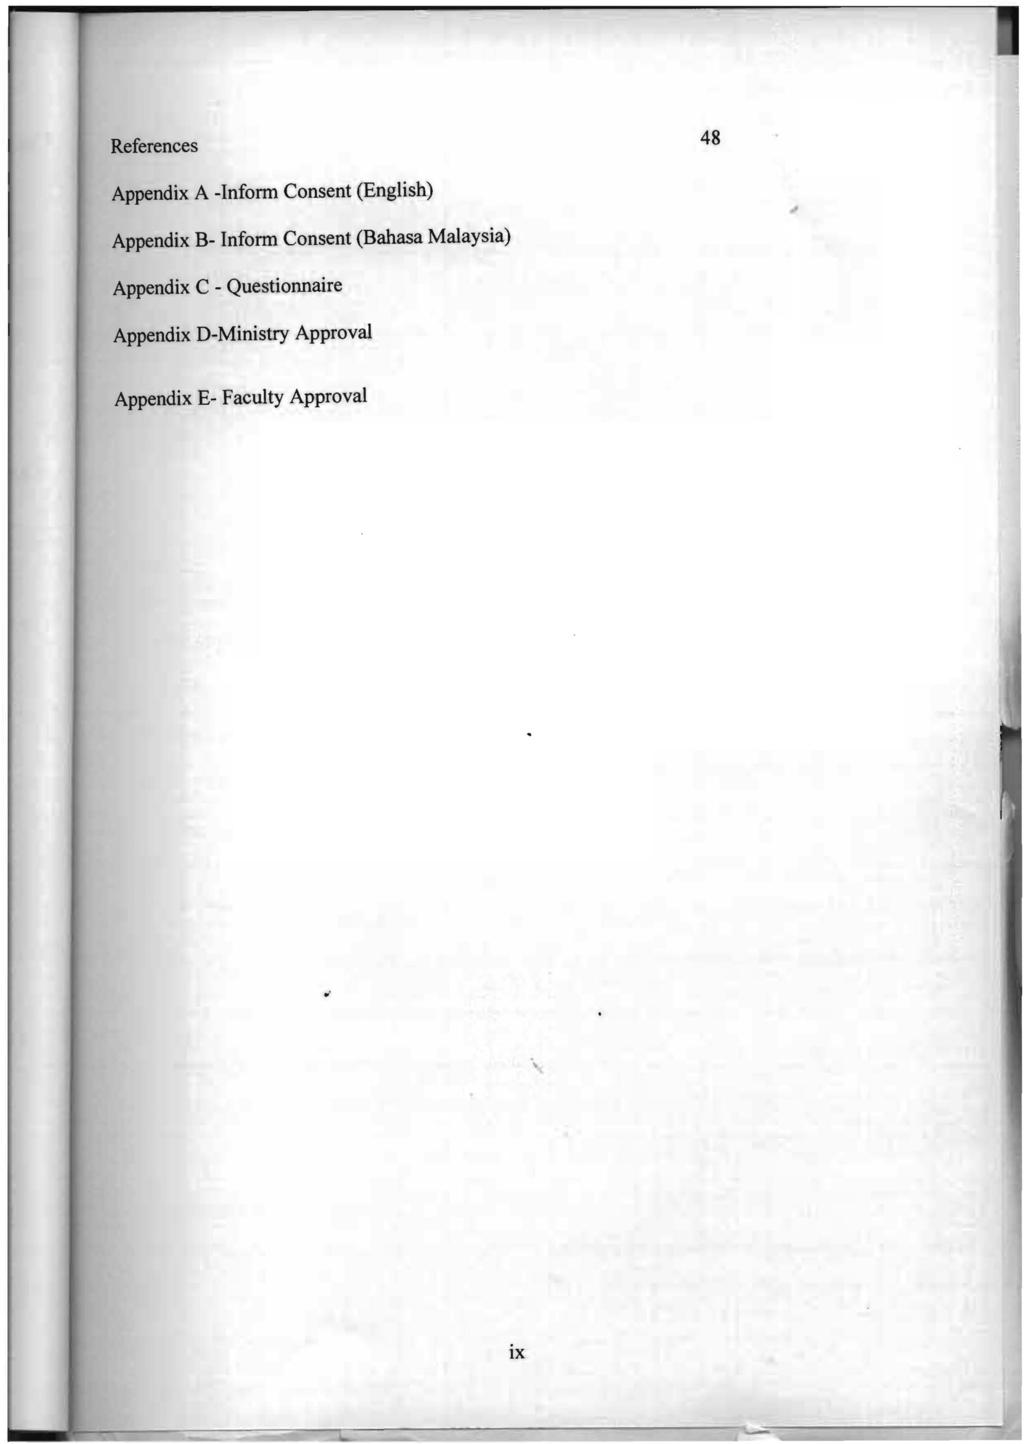 References 48 Appendix A -Infonn Consent (English) Appendix B- Infonn Consent (Bahasa